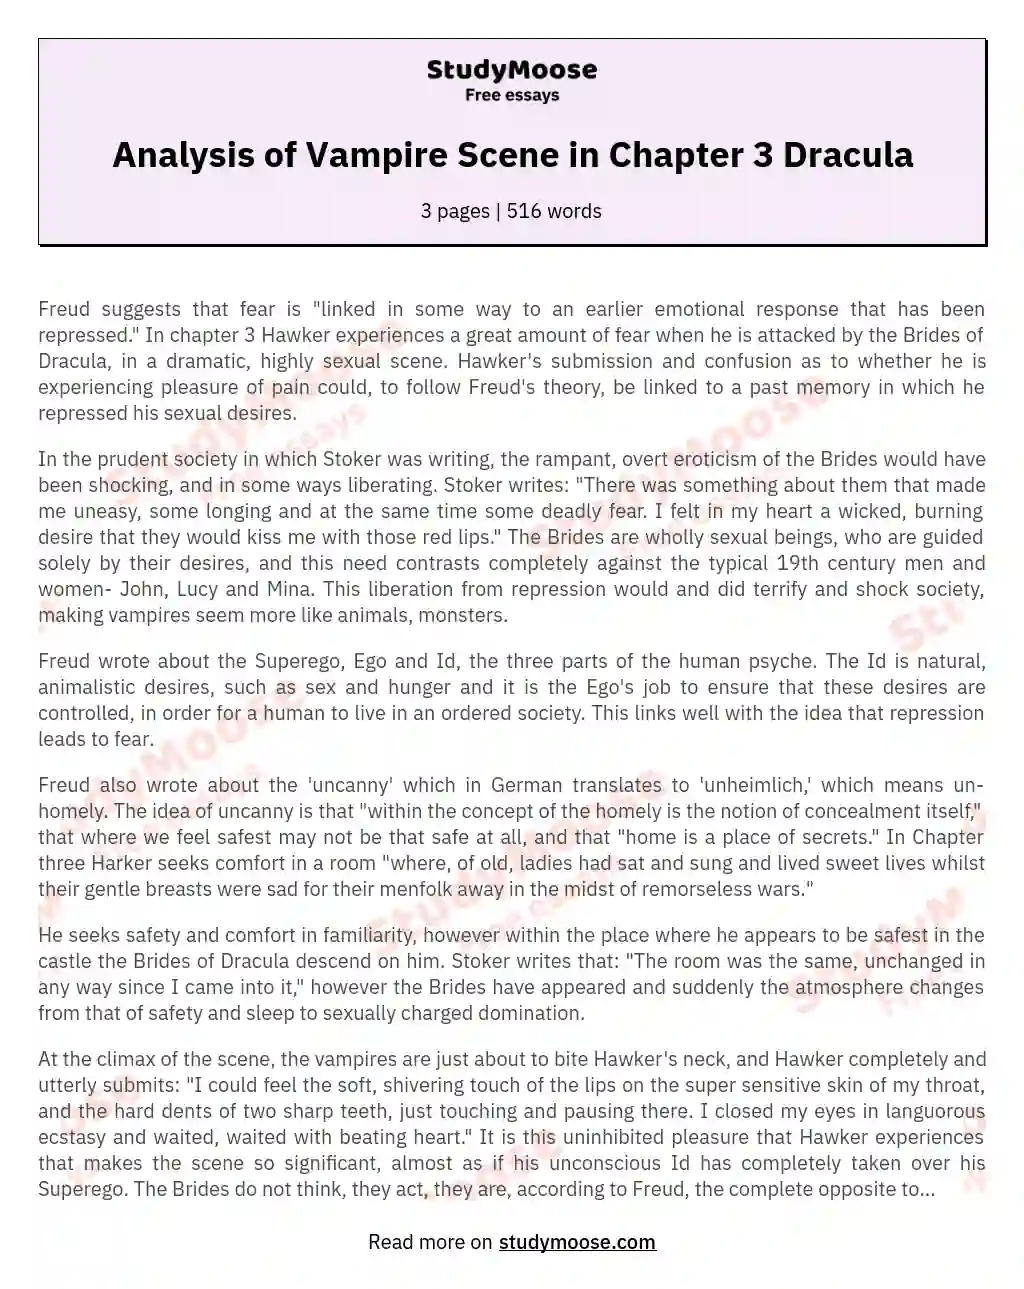 title for vampire essay